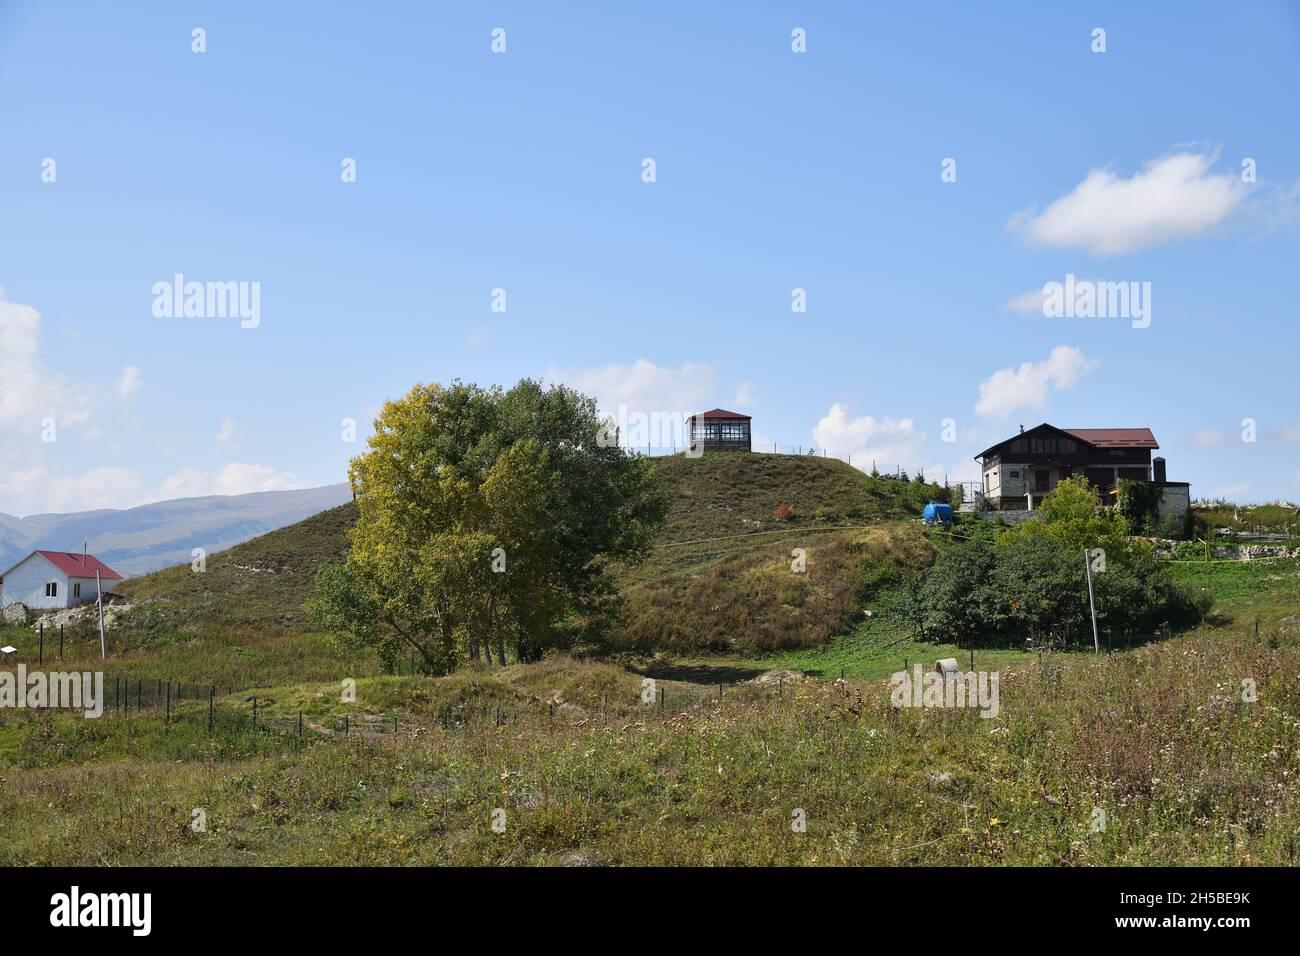 Countryside landscape and mountain village in Chechnya, Russia. Vedeno district of the Chechen Republic Stock Photo